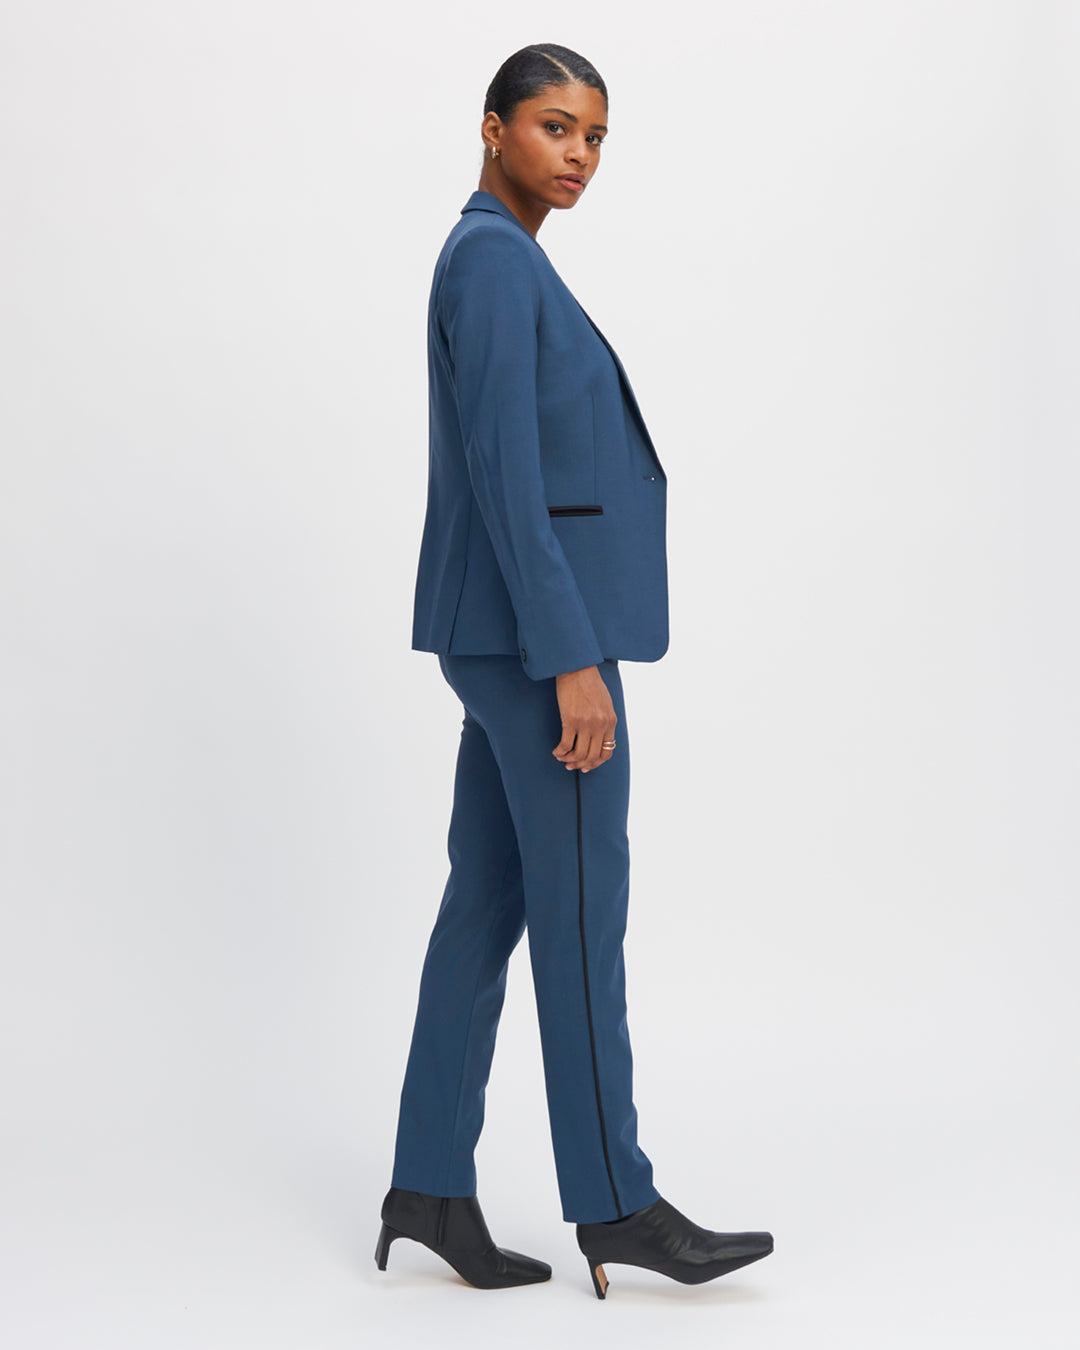 Tailor-jacket-blazer-blue-grey-Cut-cut-collar-tailor-Length-below-bottom-Two-pockets-pass-punched-Two-pockets-inside-Two-pockets-fully-lined-Button-down-sleeves-Buttons-black-17H10-tailors-for-women-paris-